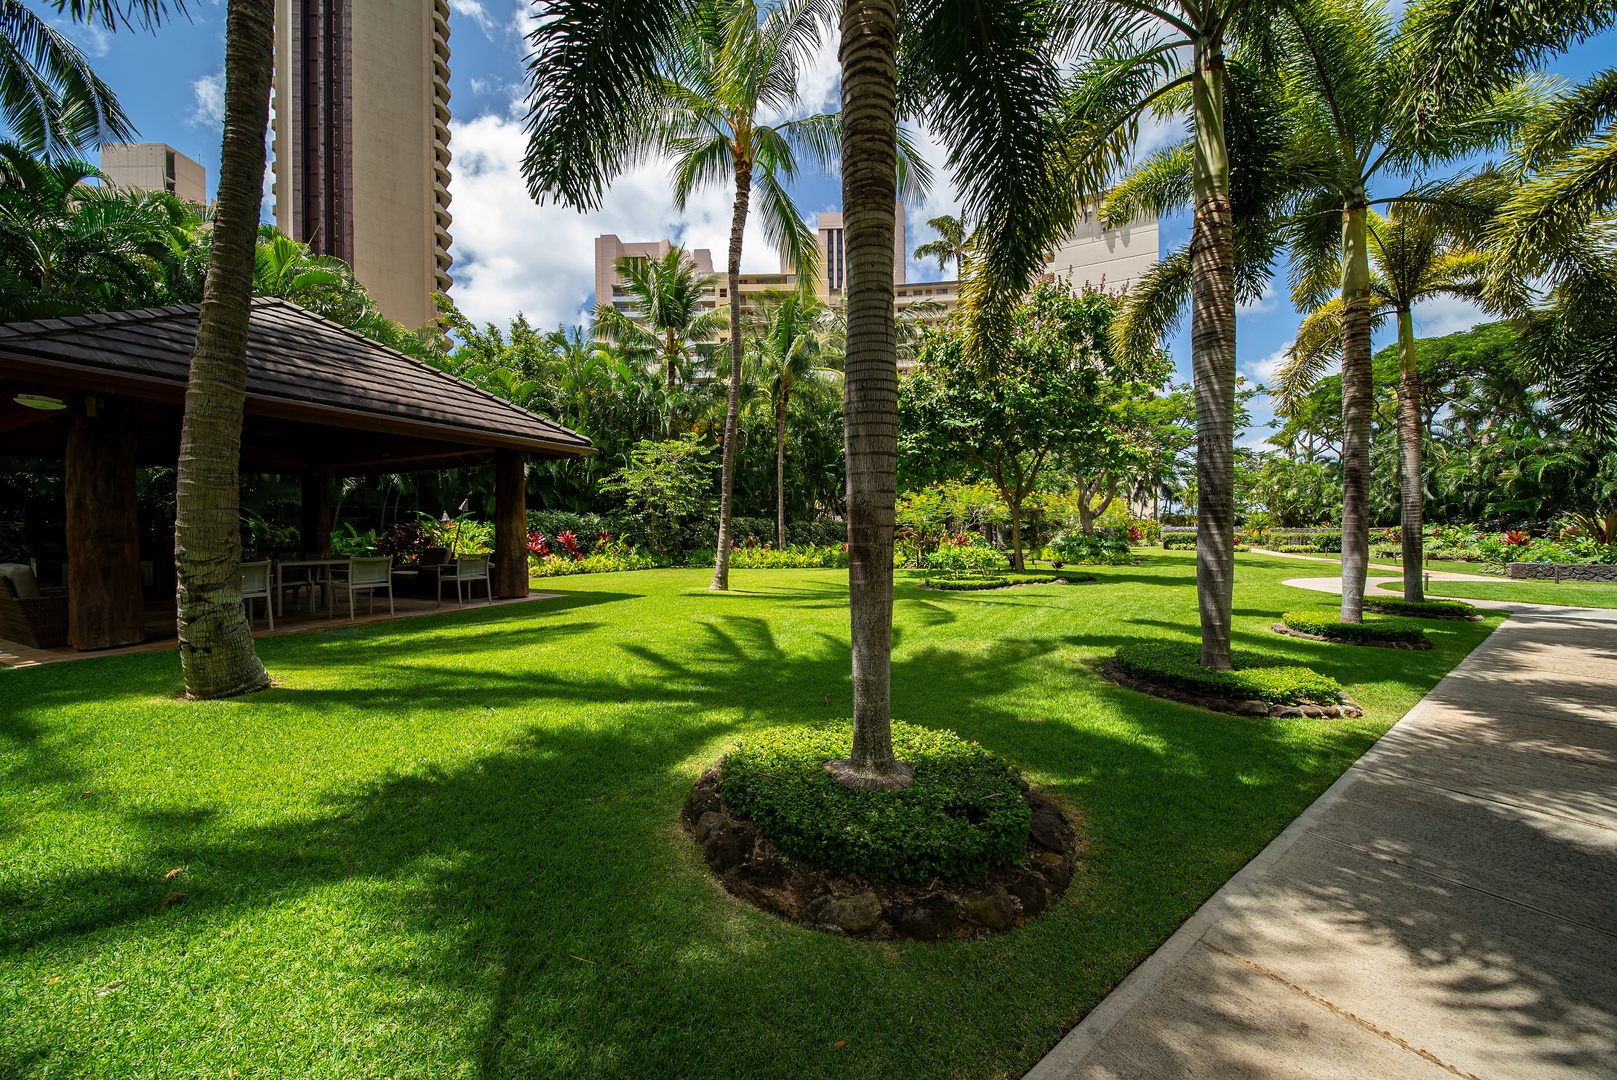 Honolulu Vacation Rentals, Watermark Waikiki Unit 901 - Enjoy the tropical landscaping!